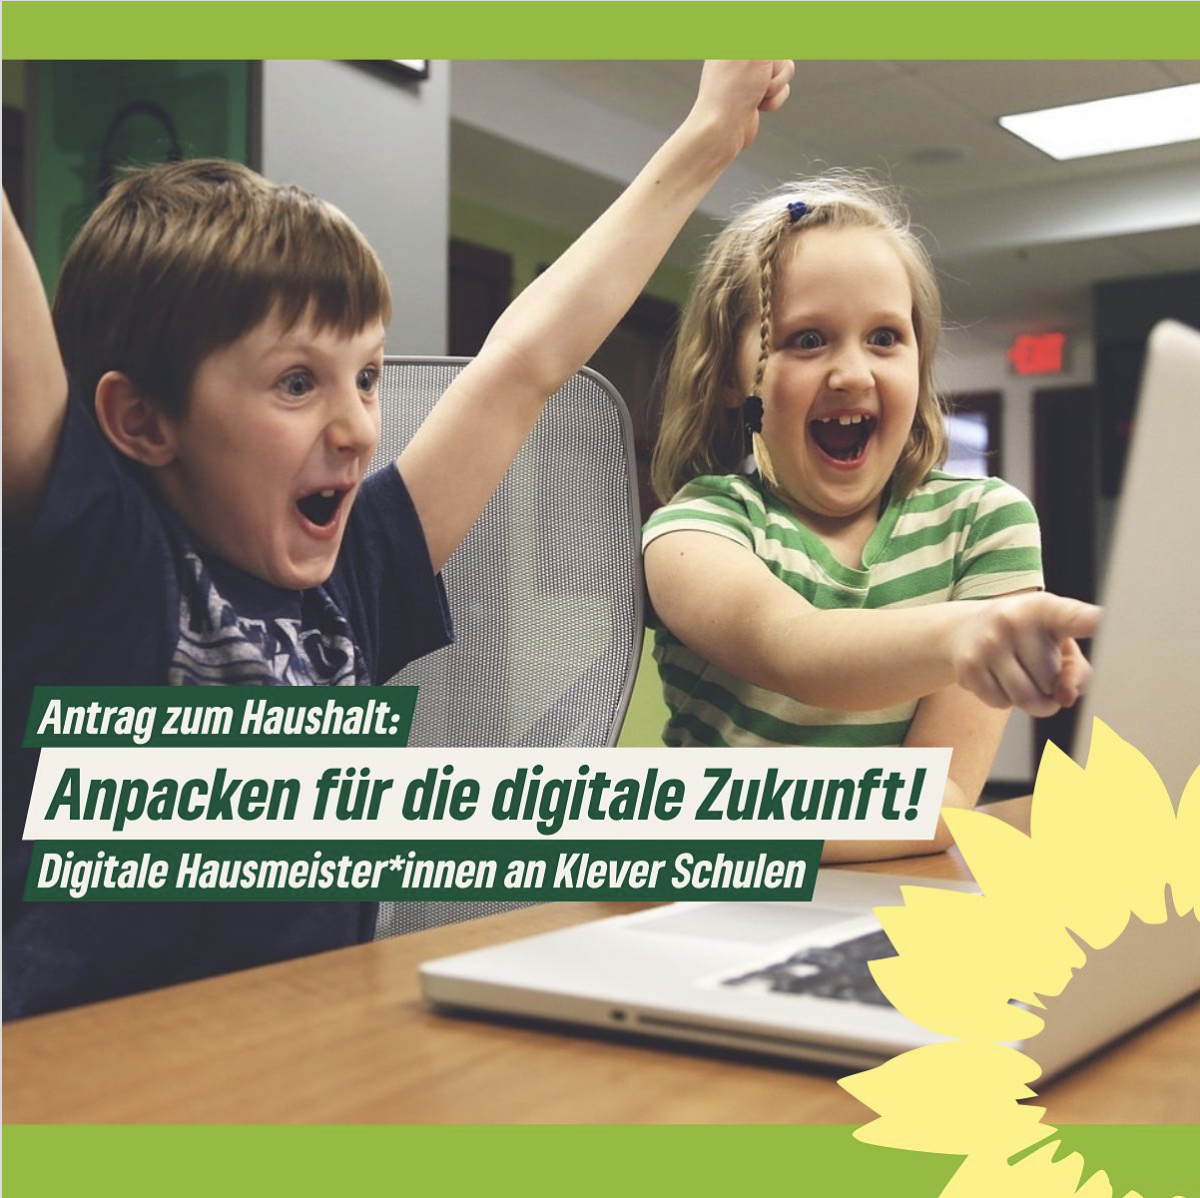 Gruener-Antrag-zum-Haushalt-Digitale Hausmeister